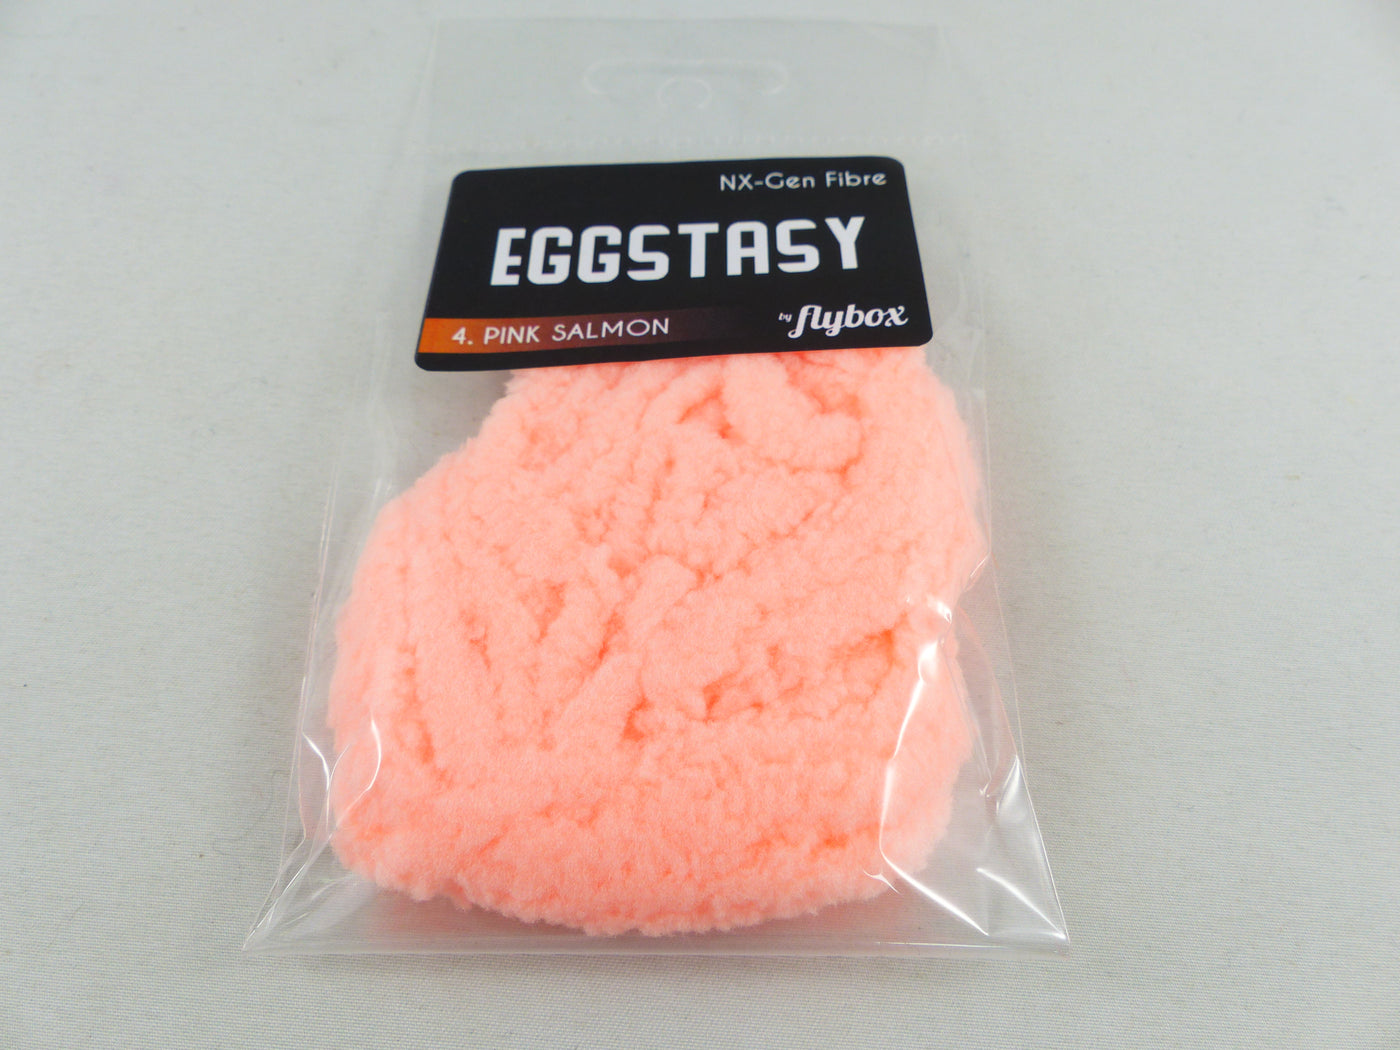 Flybox Eggstasy